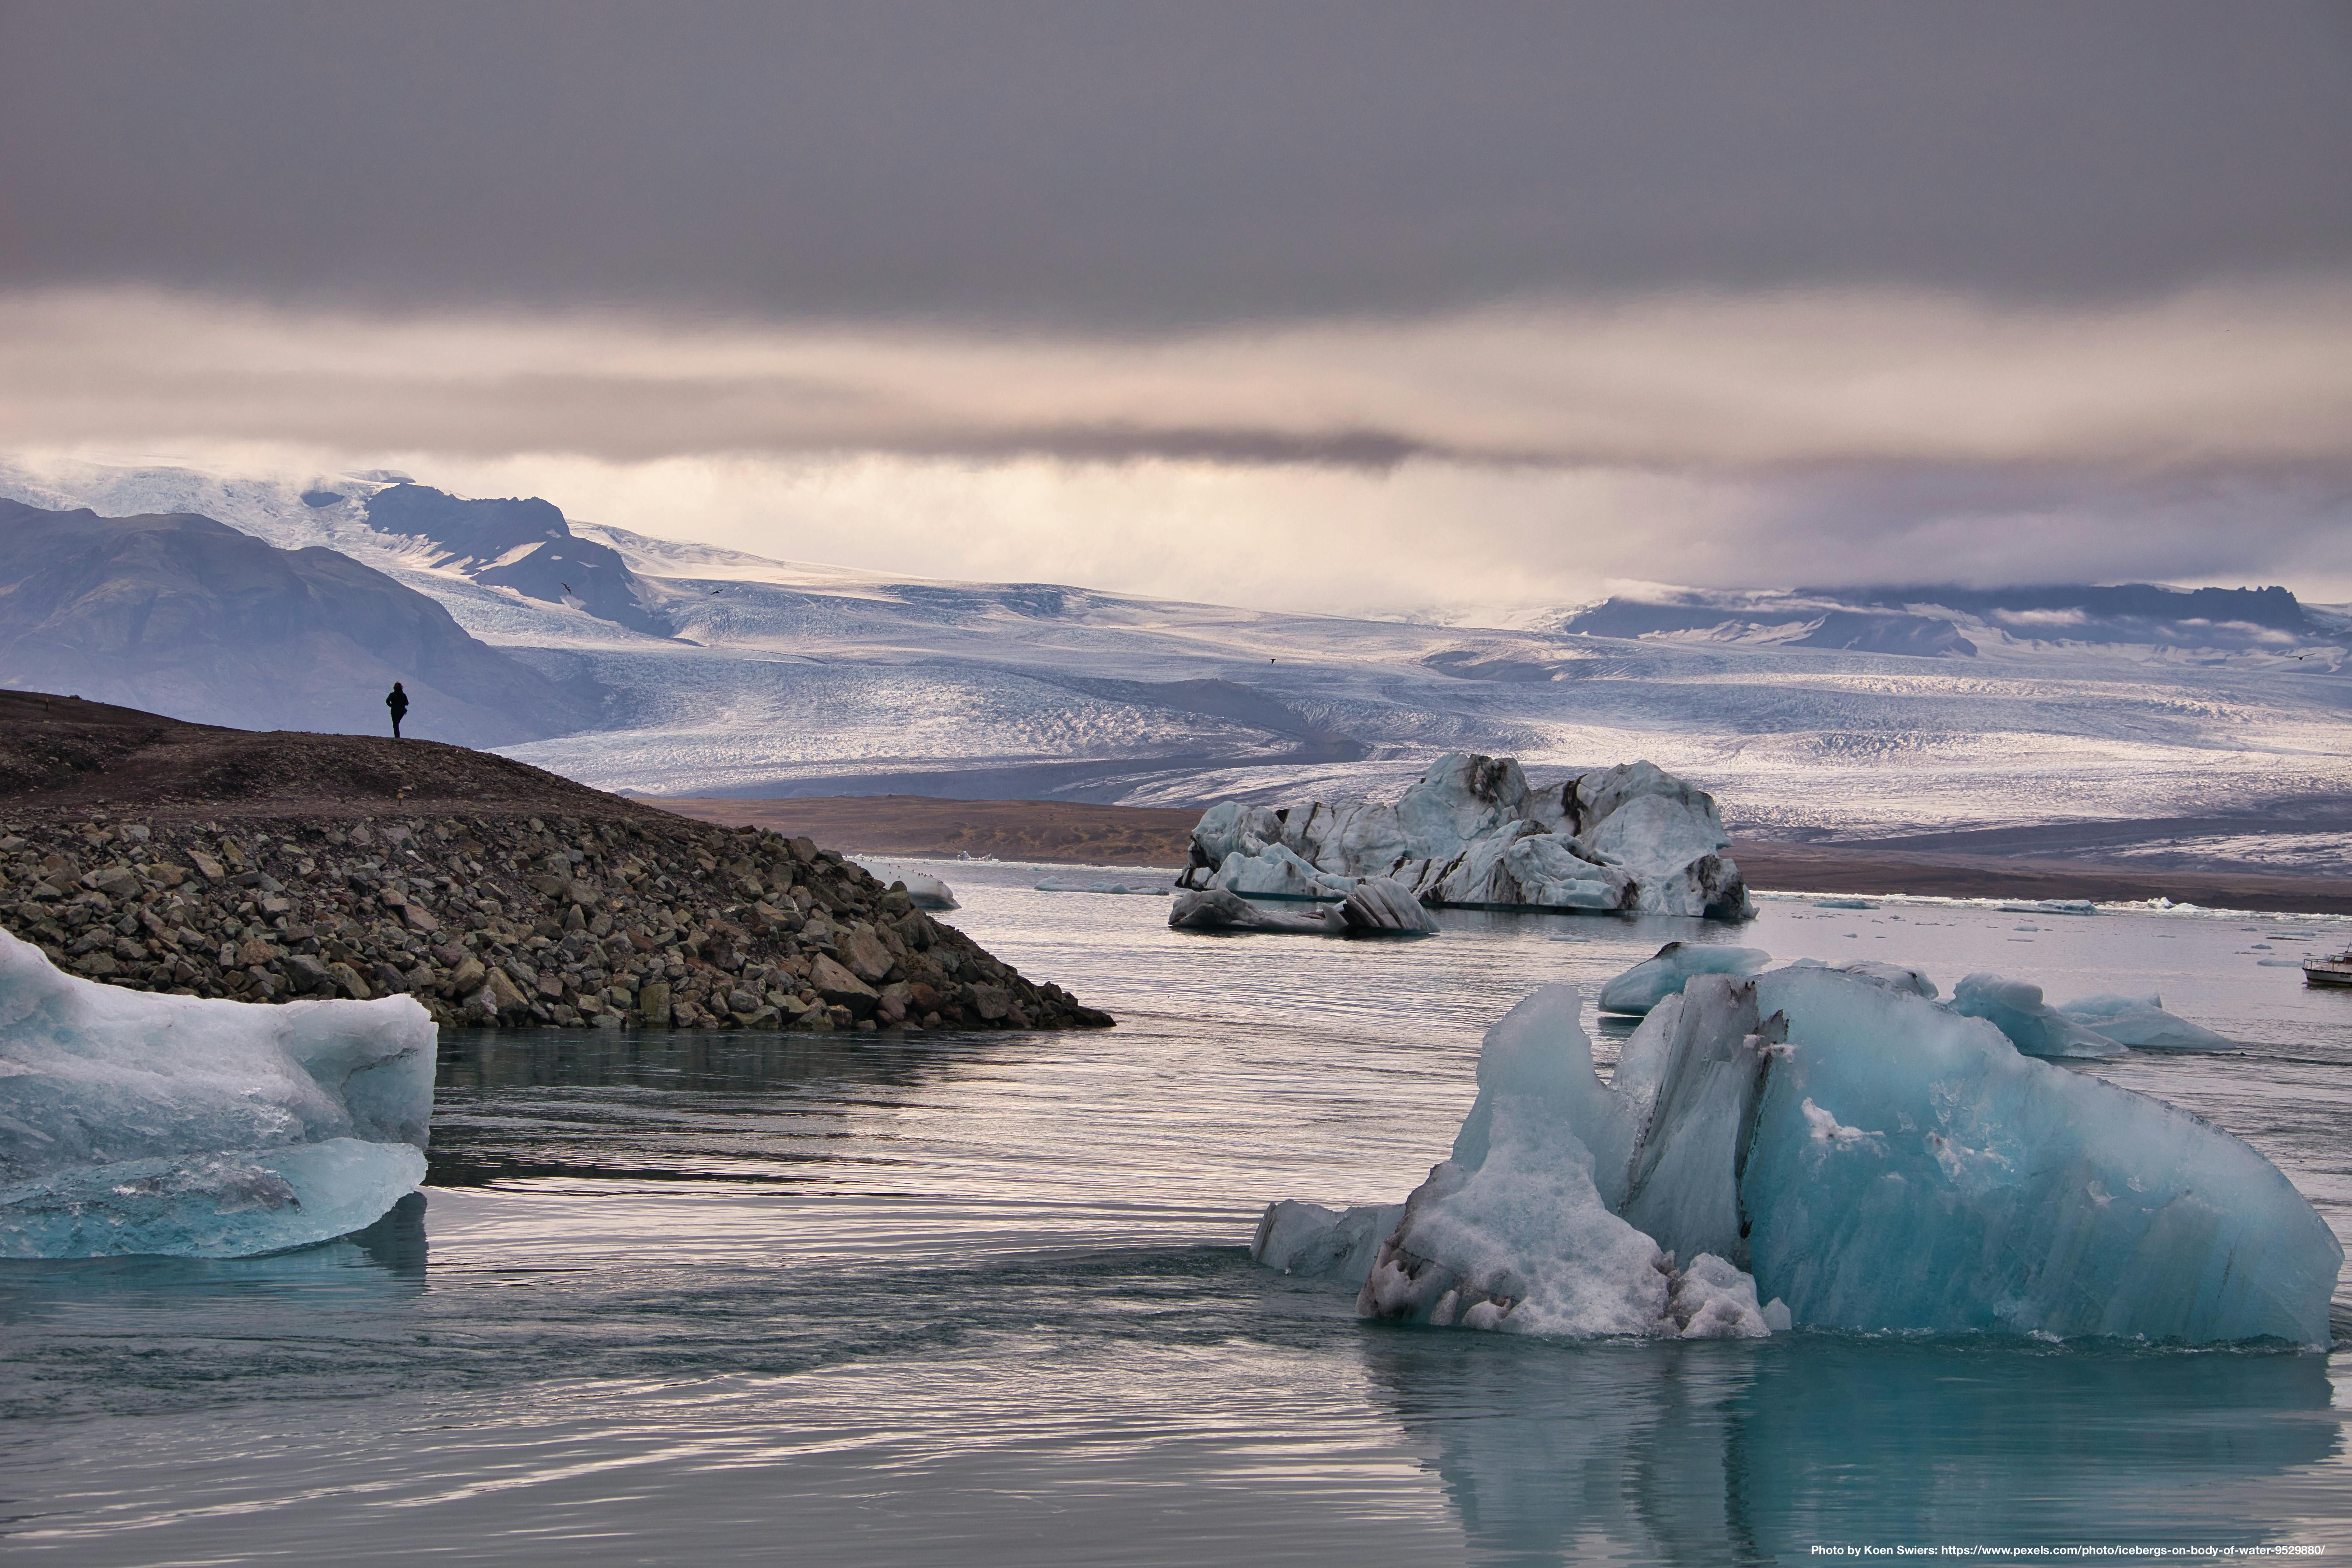 Photo by Koen Swiers: https://www.pexels.com/photo/icebergs-on-body-of-water-9529880/